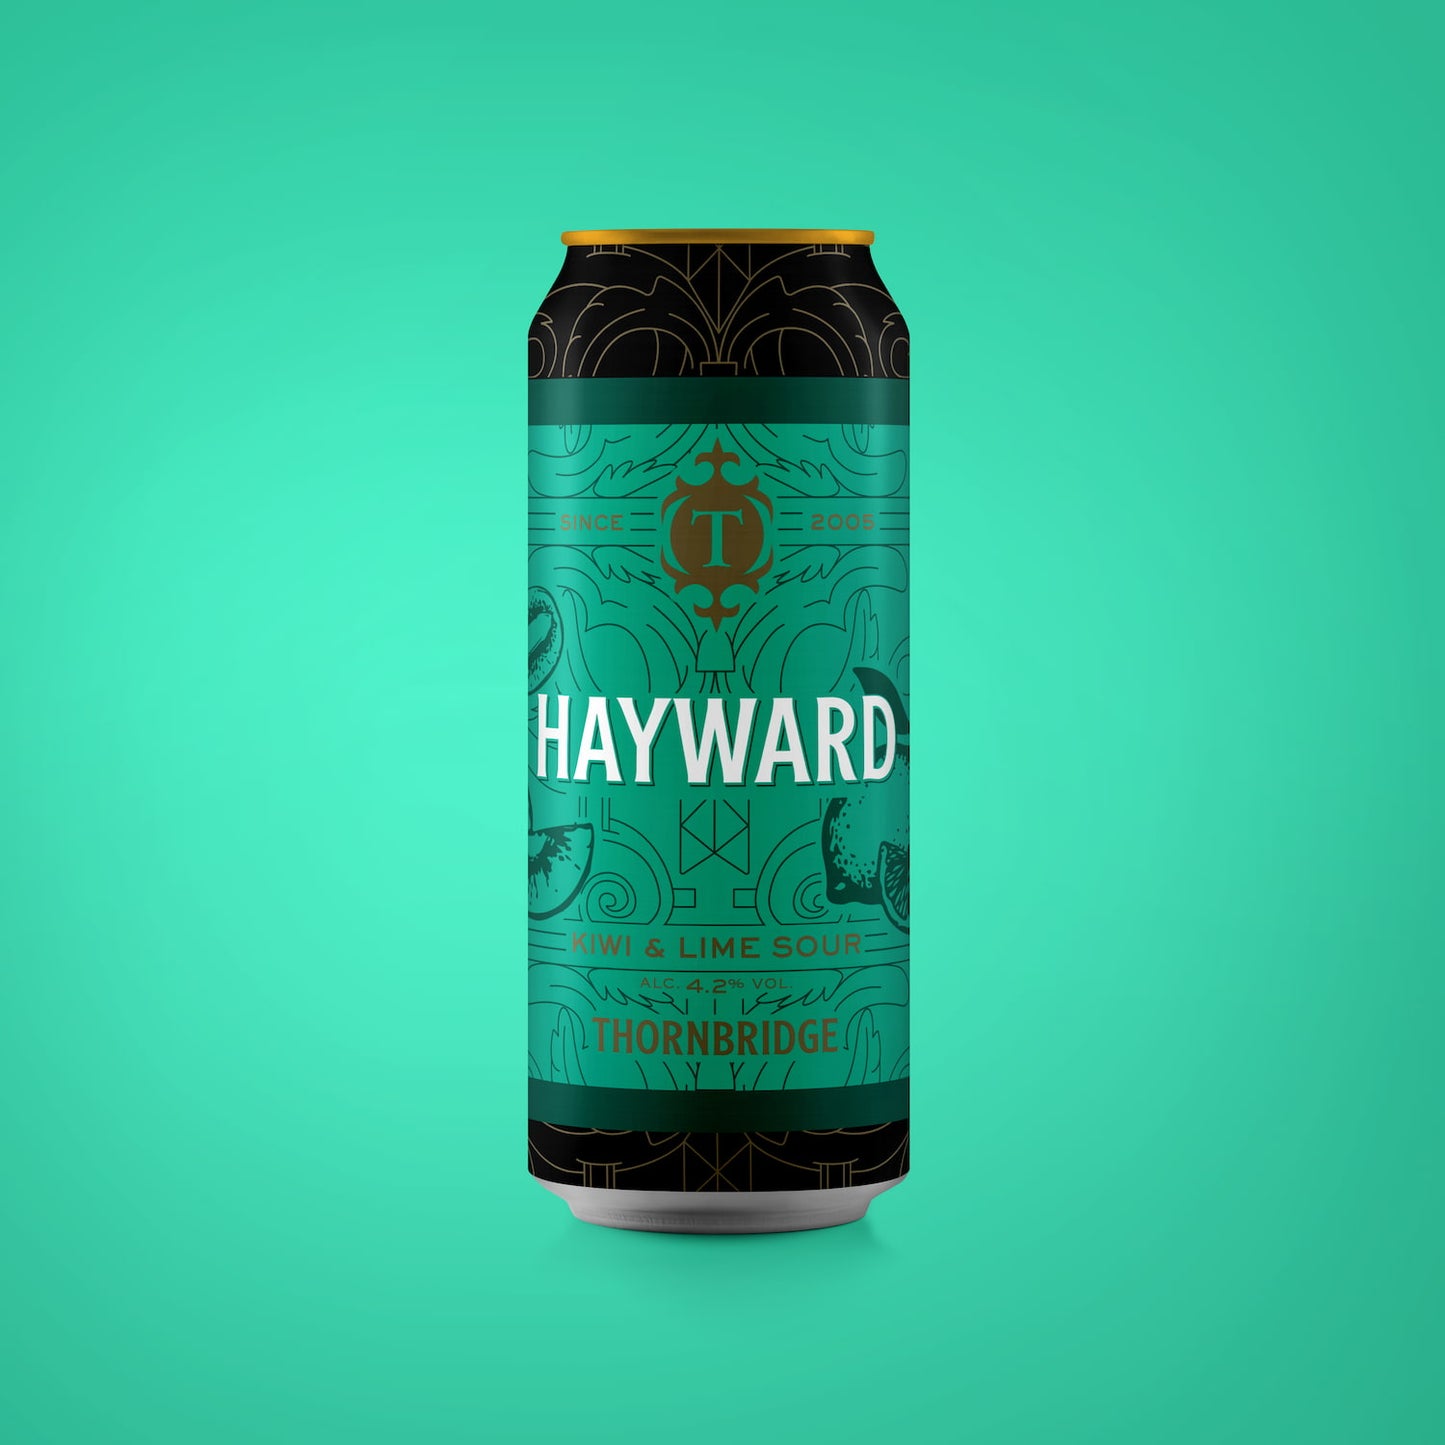 Hayward, 4.2% Kiwi and Lime Sour Beer - Single Can Thornbridge